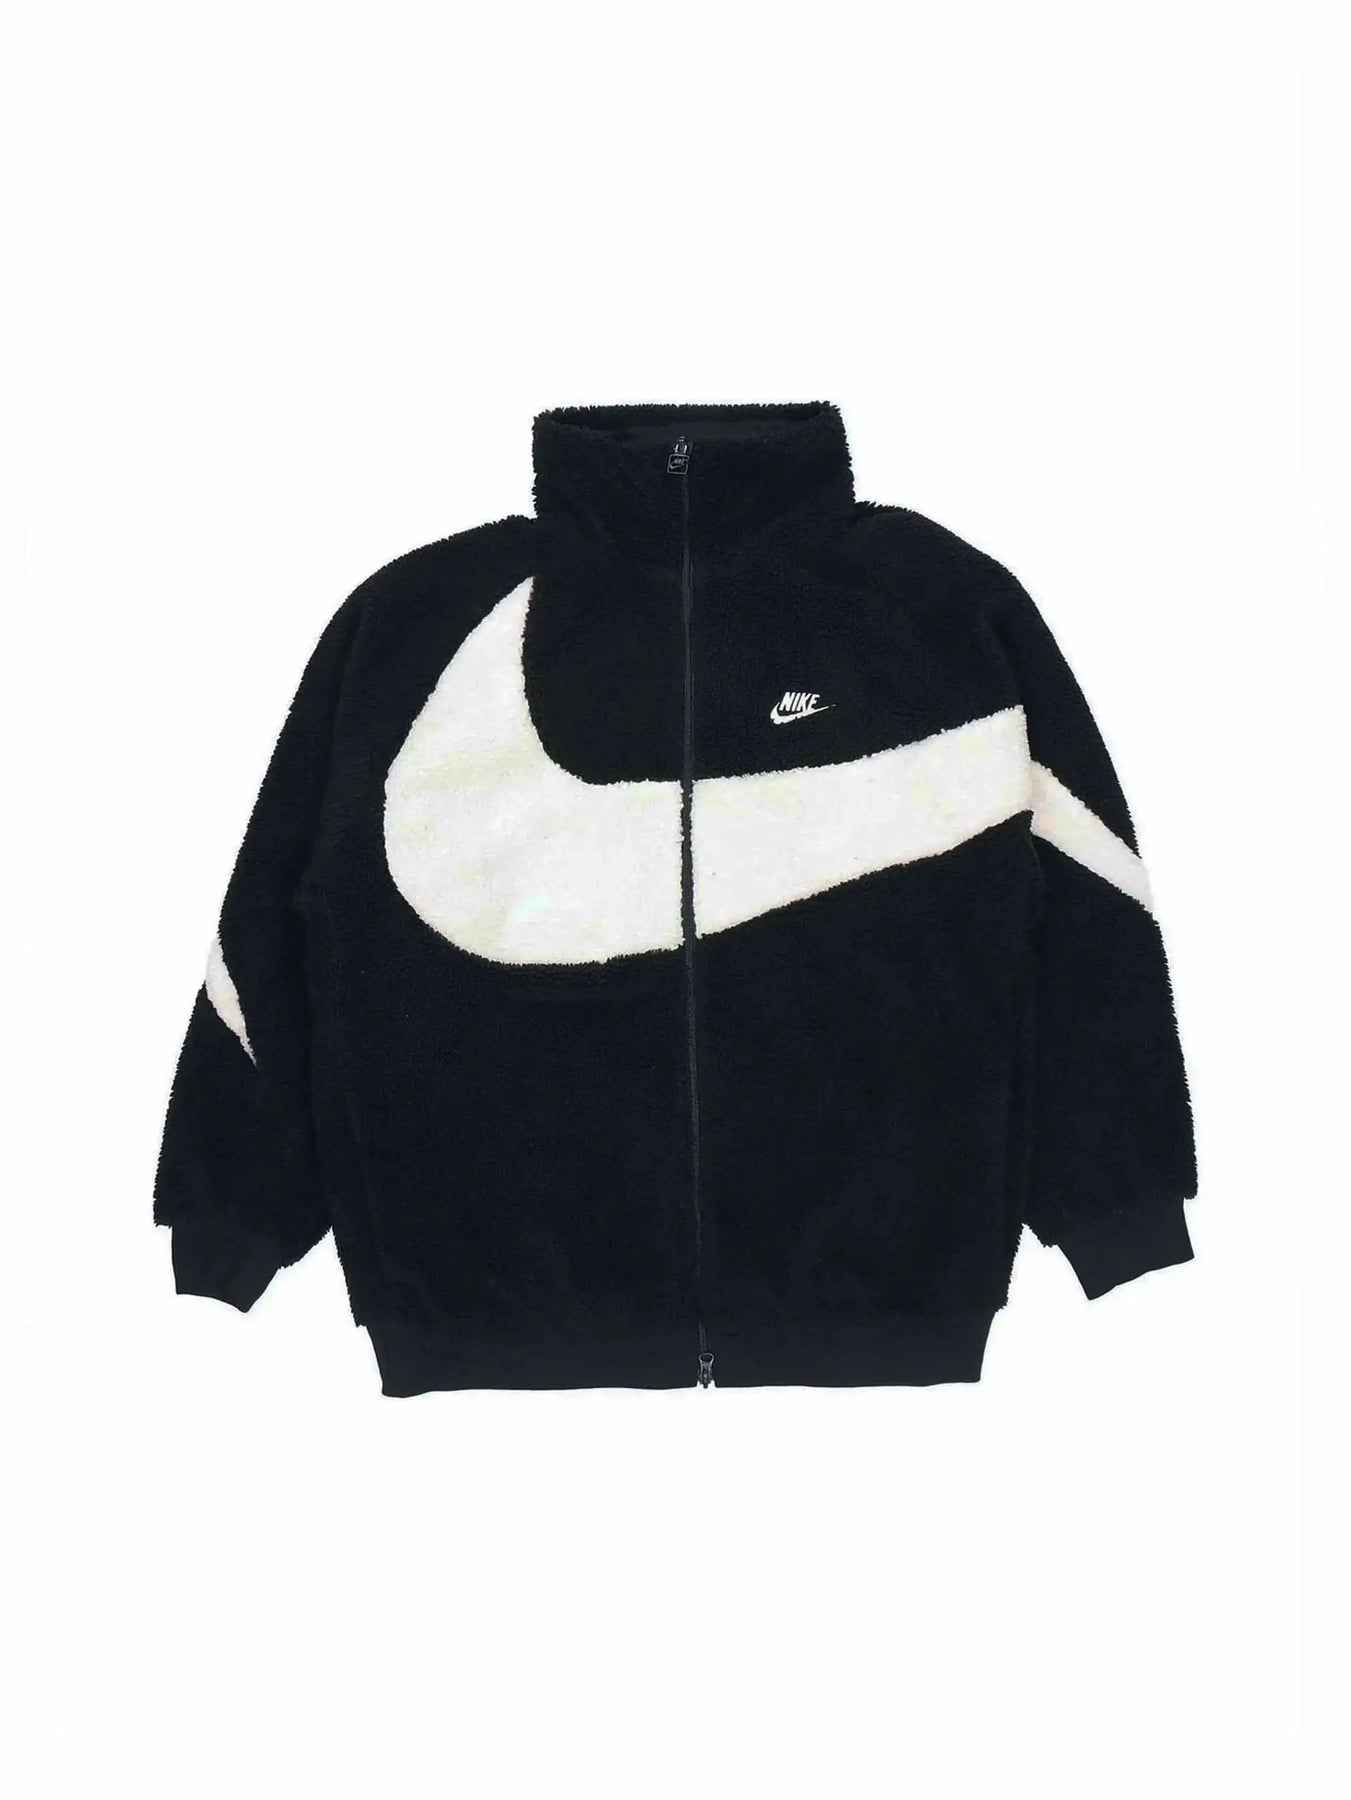 Buy Nike Big Swoosh Reversible Boa Jacket Black White [Asia – Prior